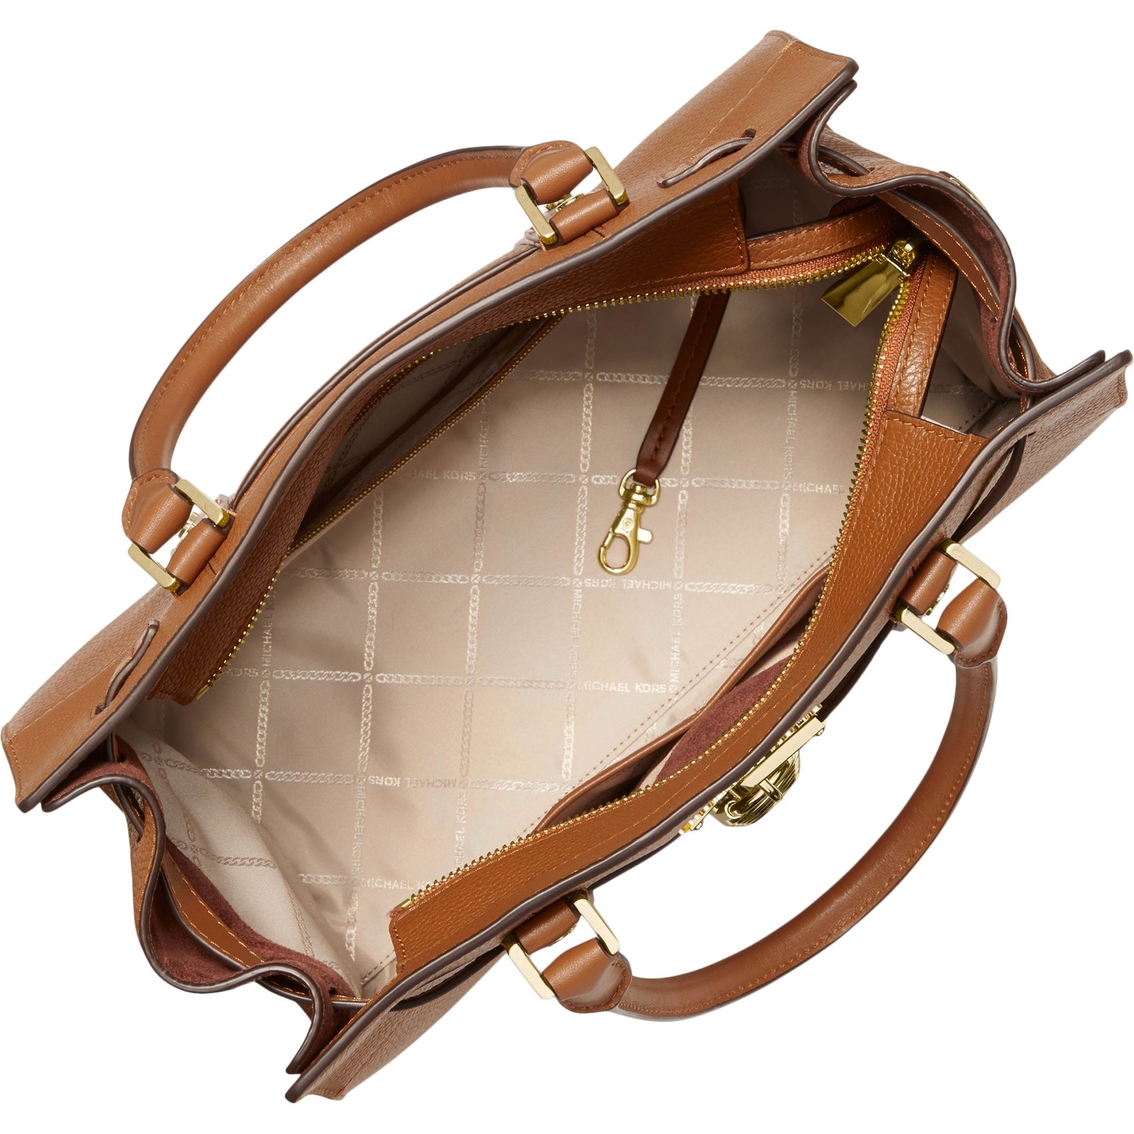 Michael Kors Hamilton Large Leather Satchel Handbag - Image 4 of 5